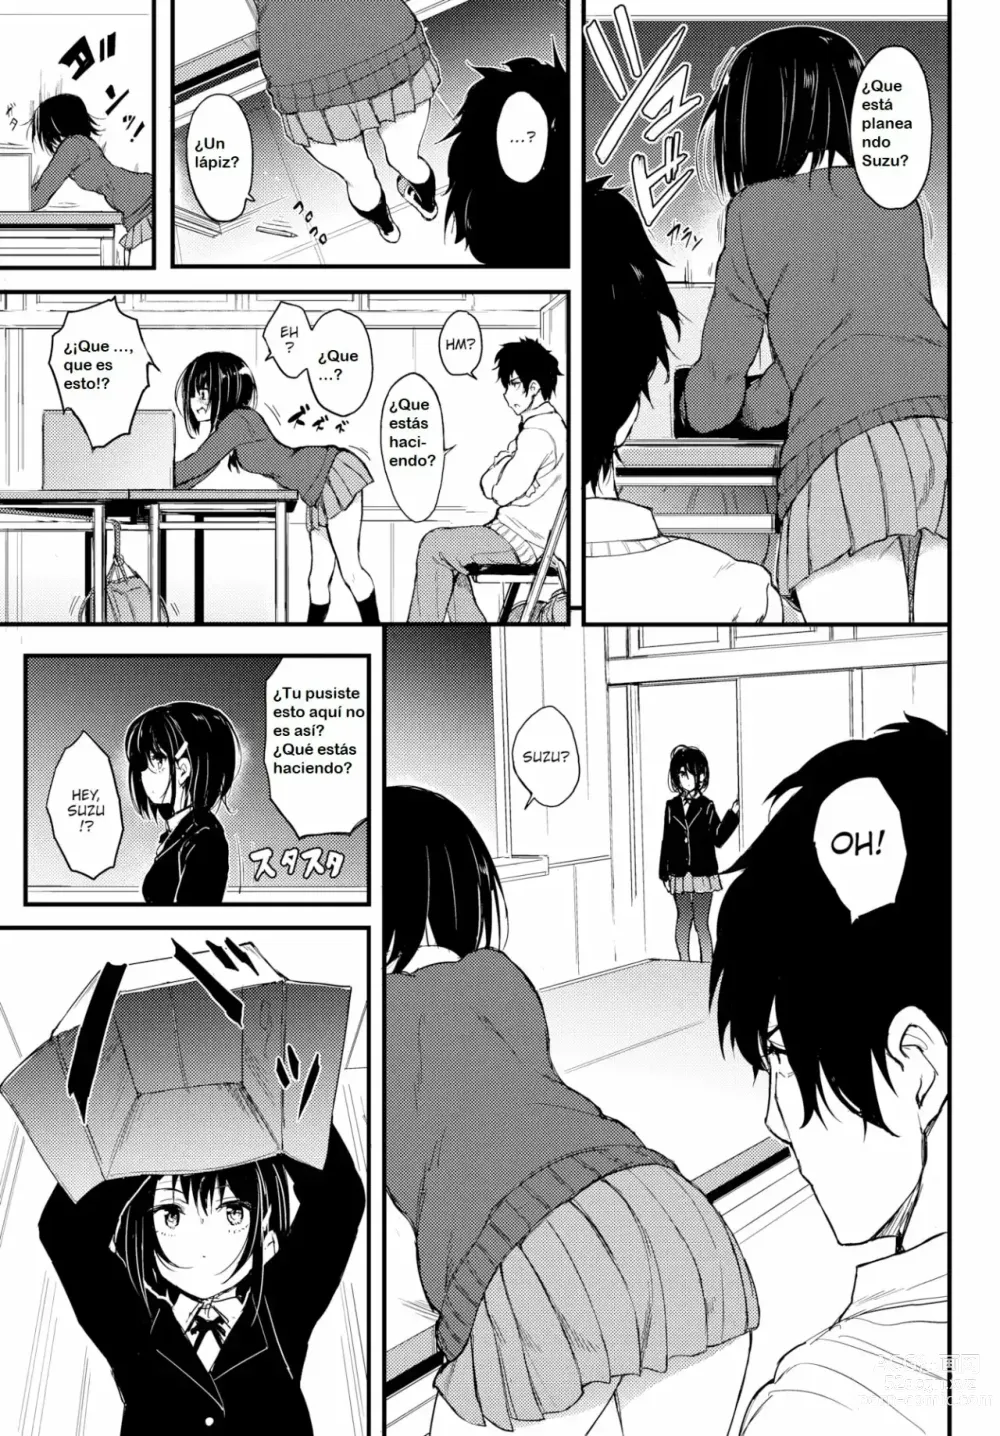 Page 4 of doujinshi Kaede & Suzu 1-7, Spanish.